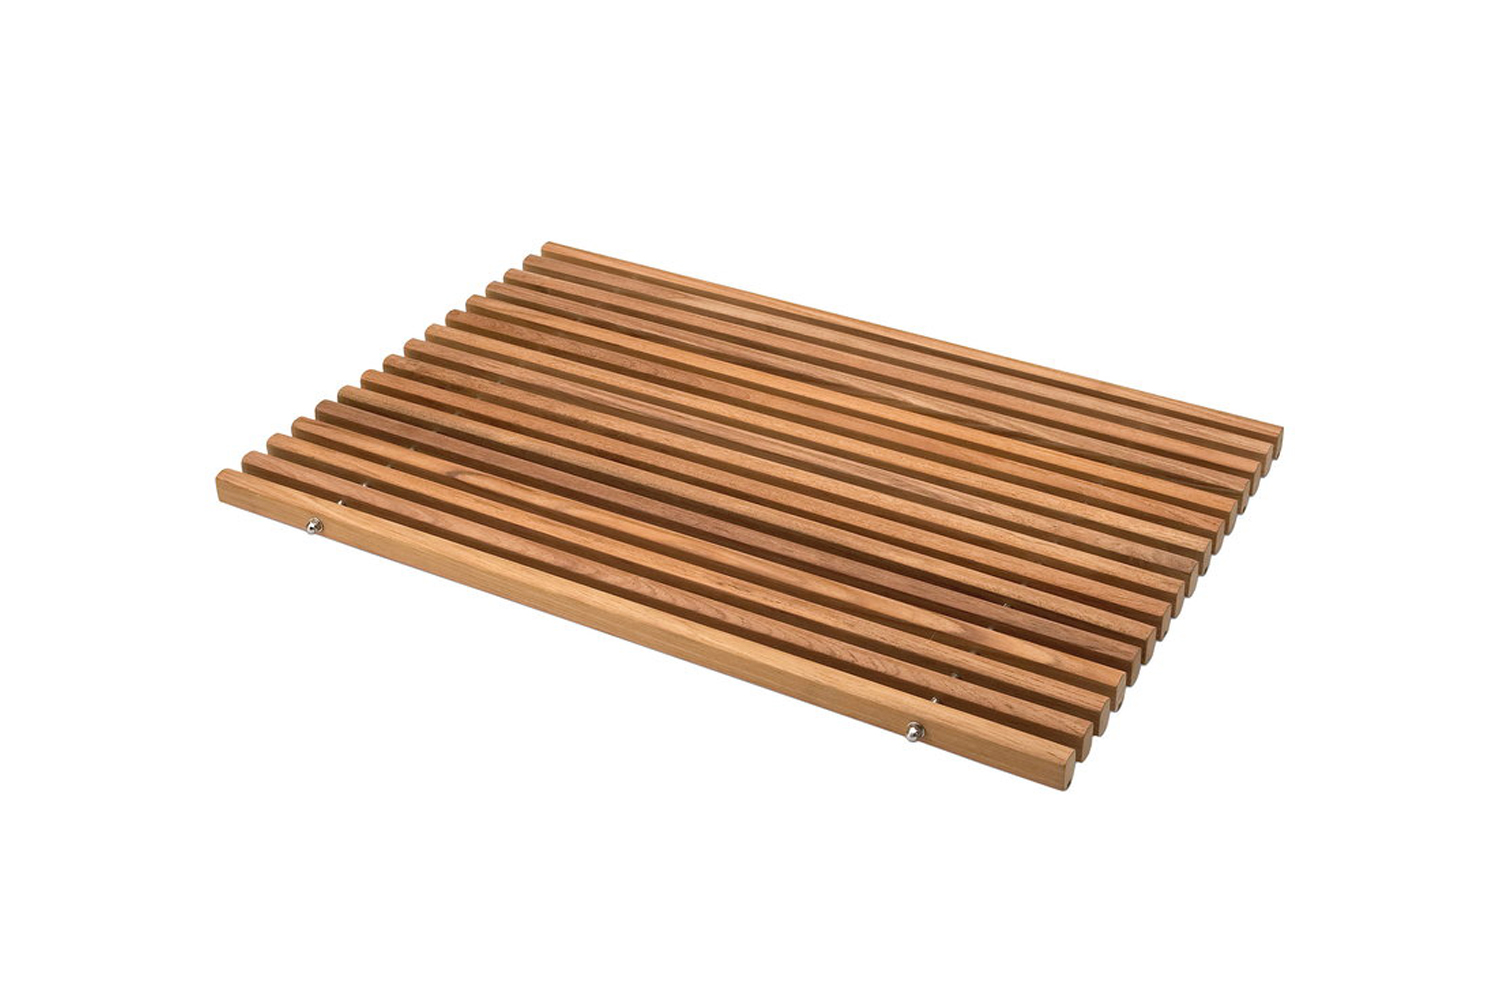 the danis mat in teak wood from danish company skagerak is made of teak and sta 10